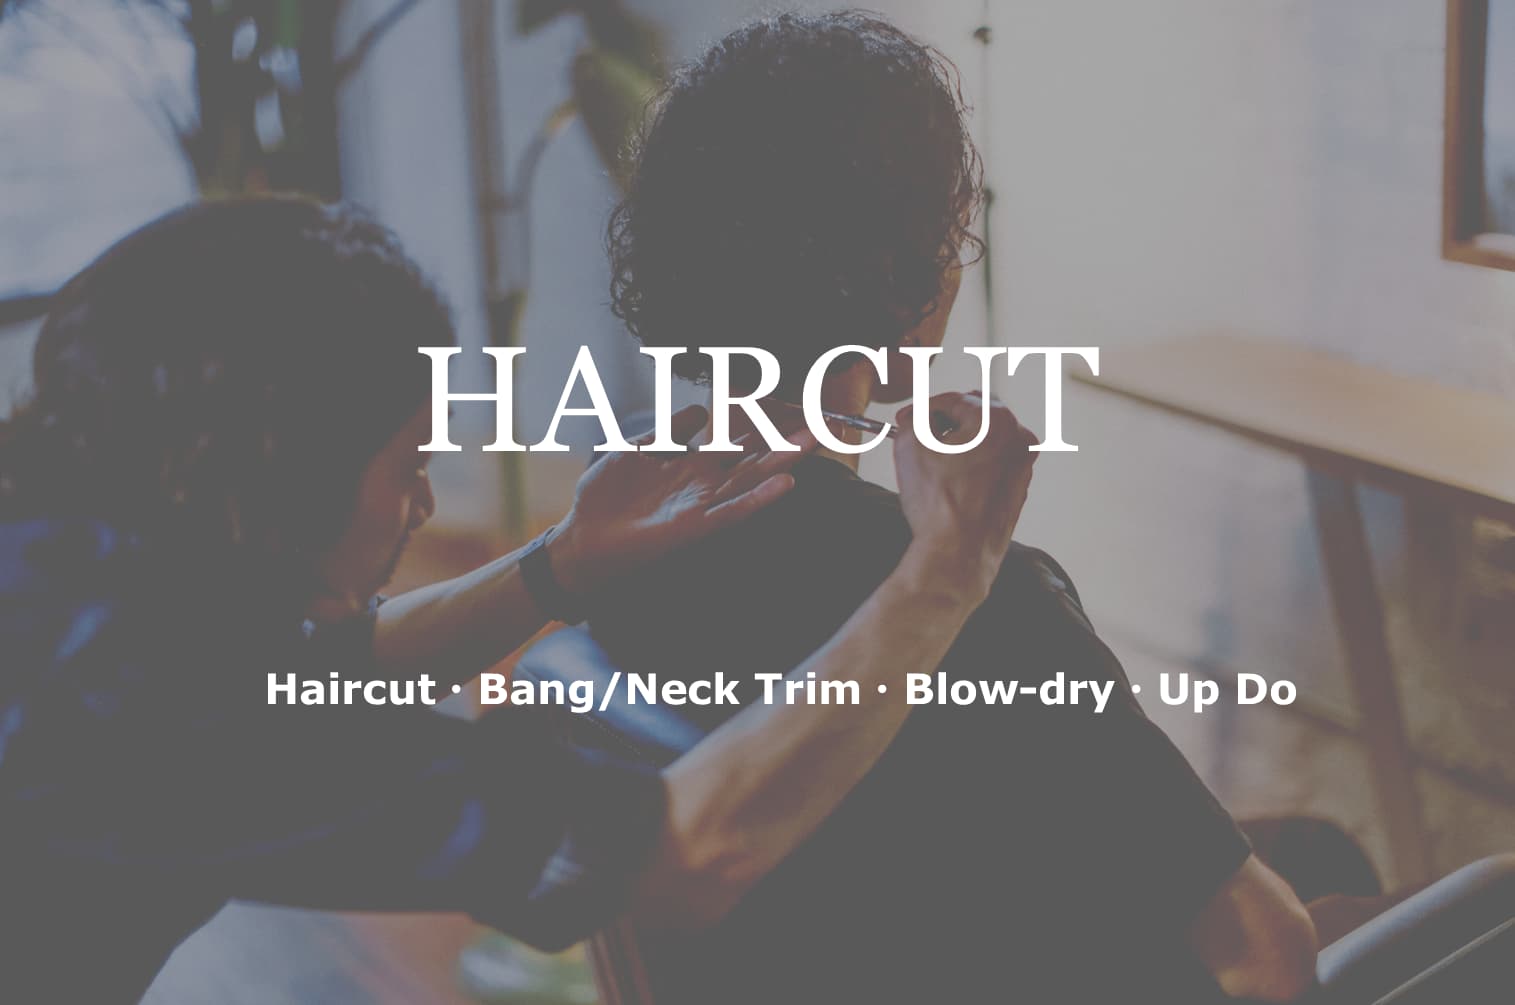 Haircut, Bang/Neck Trim, Blow-dry, Up do